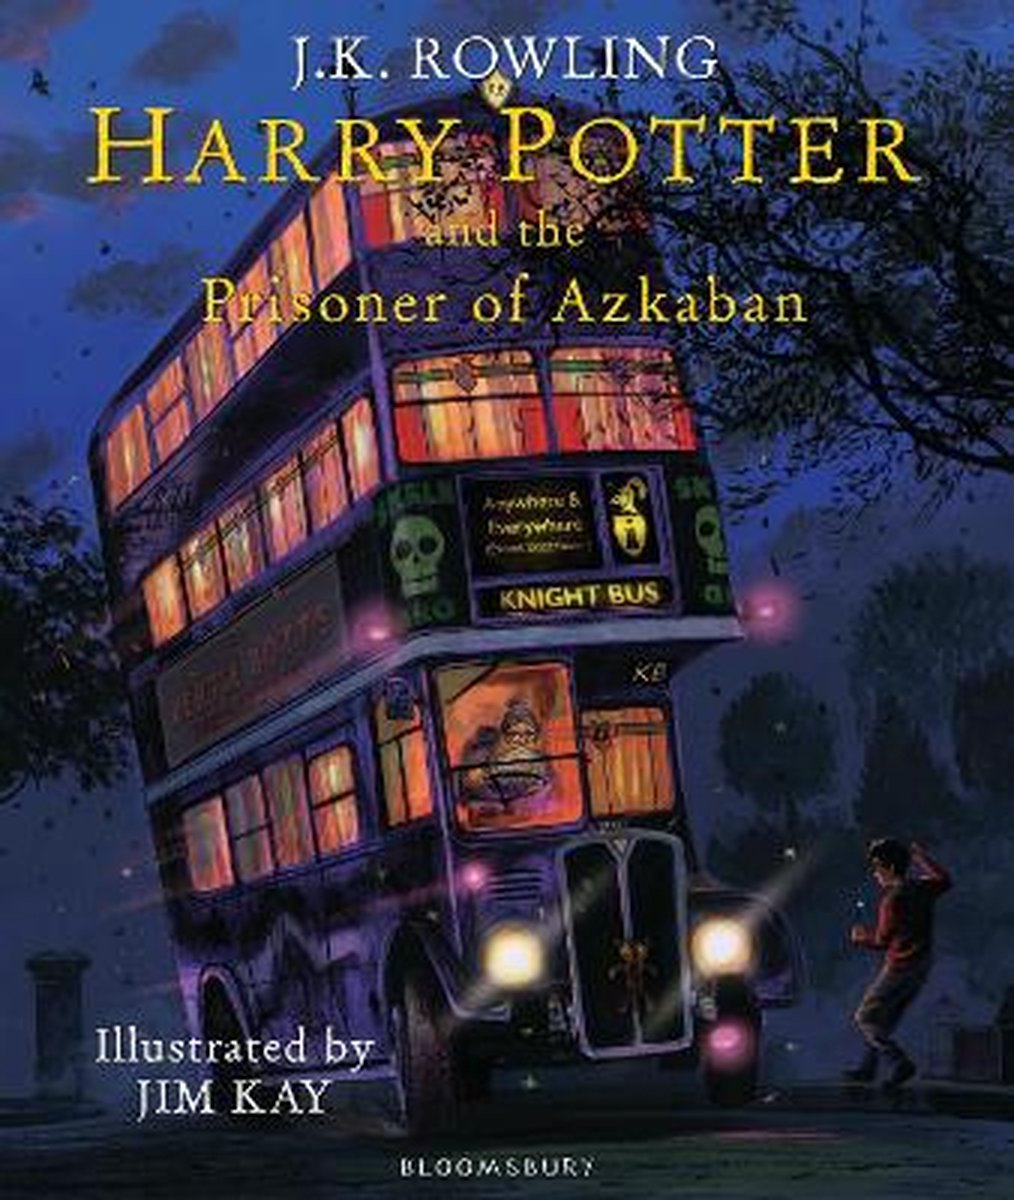 Harry Potter 3 - Harry Potter and the Prisoner of Azkaban | Illustrated Edition - J.K. Rowling